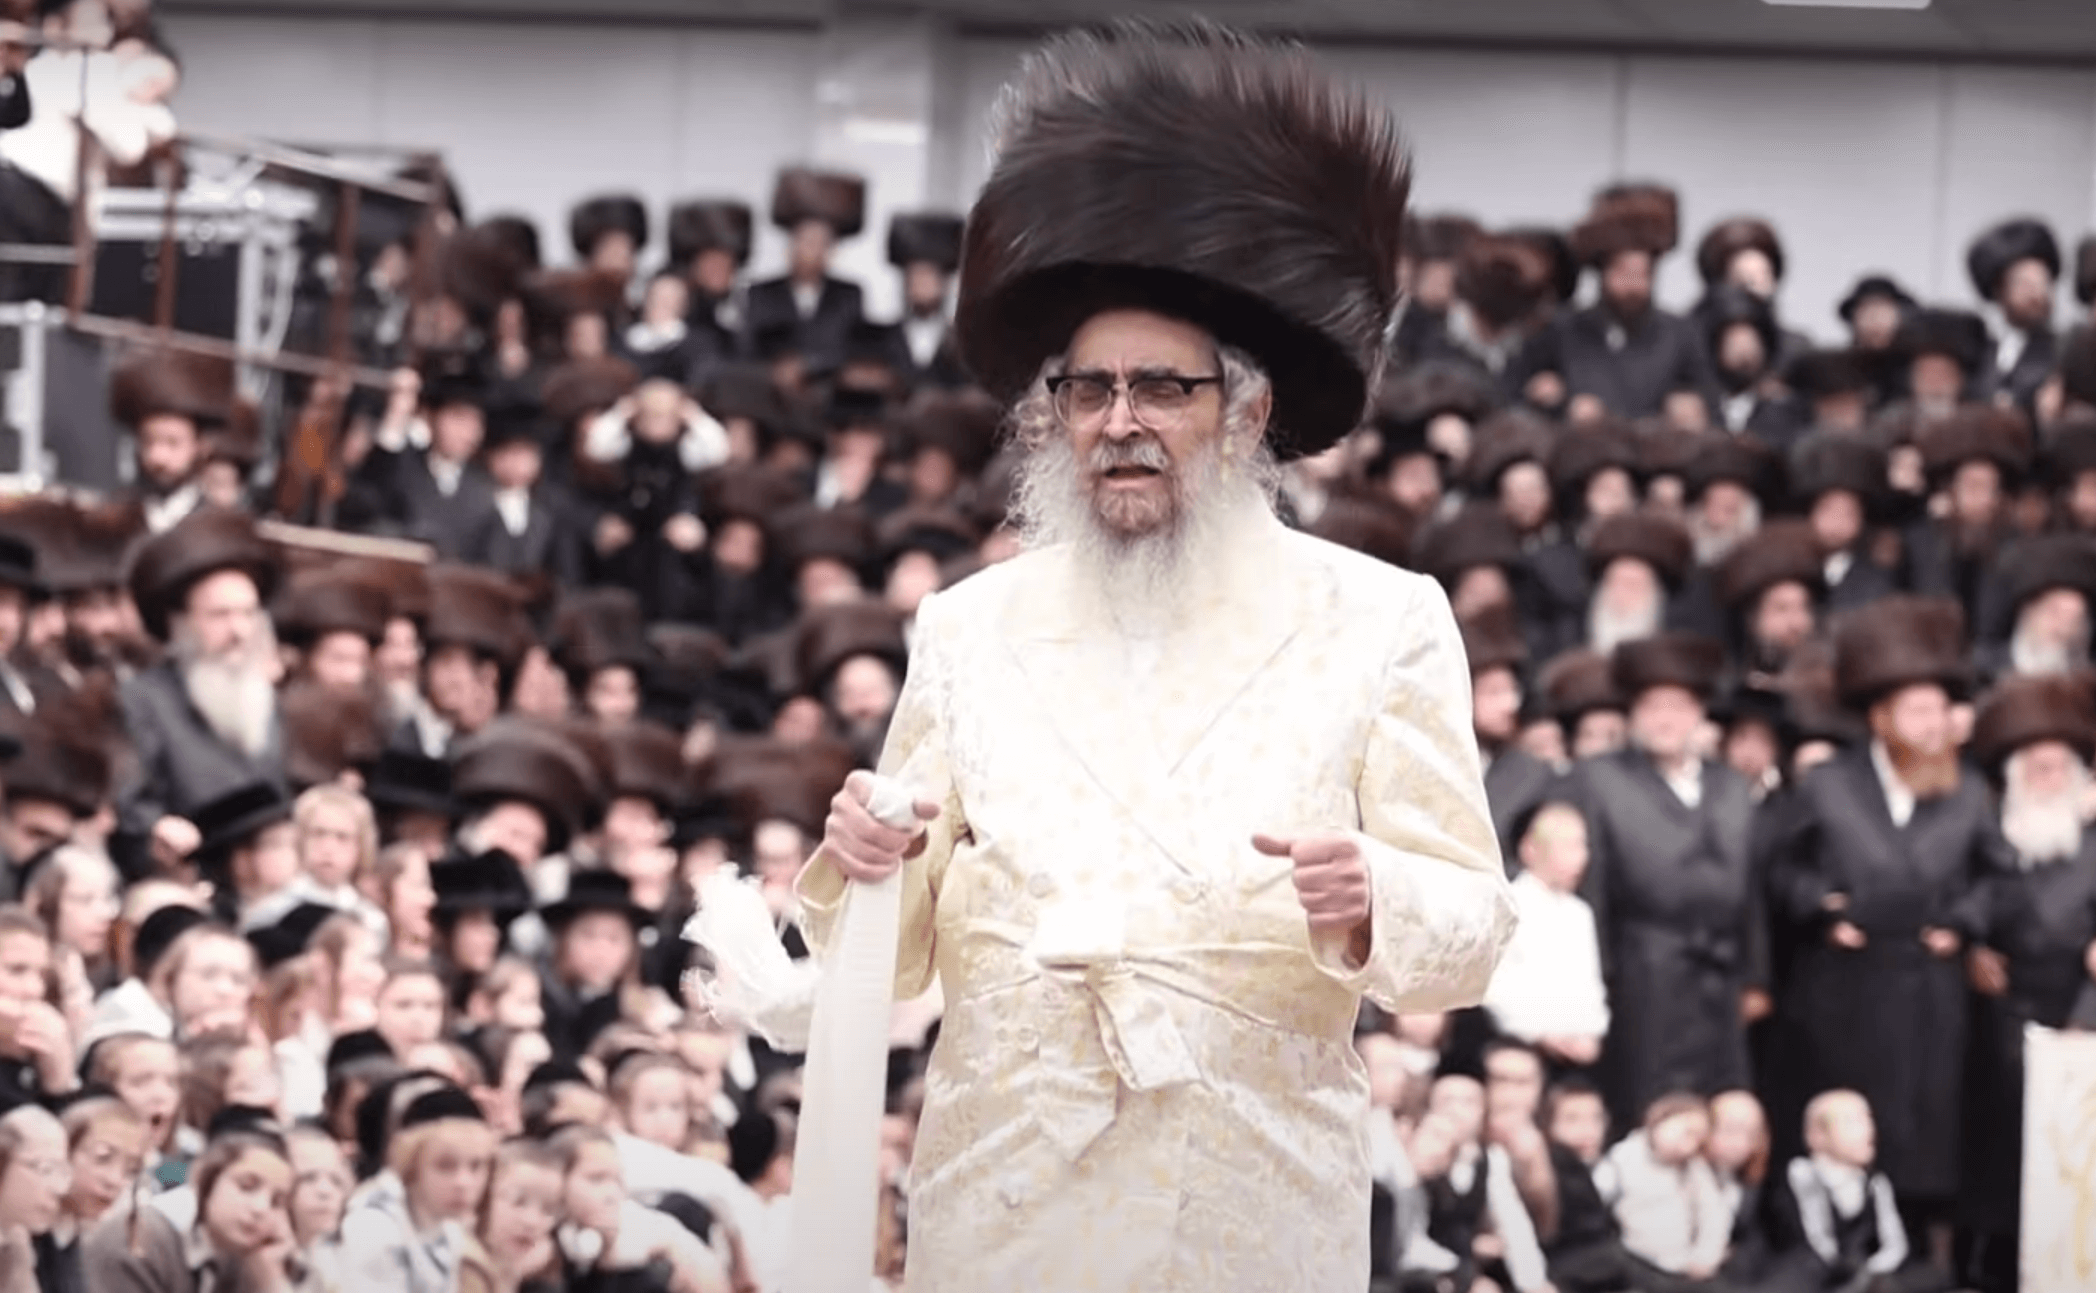 Rabbi Aaron Teitelbaum, the Grand Rebbe of Satmar in Kiryas Joel, dancing the "Mitzvah Tantz" at the wedding of his great grandson on Nov. 1, 2022.